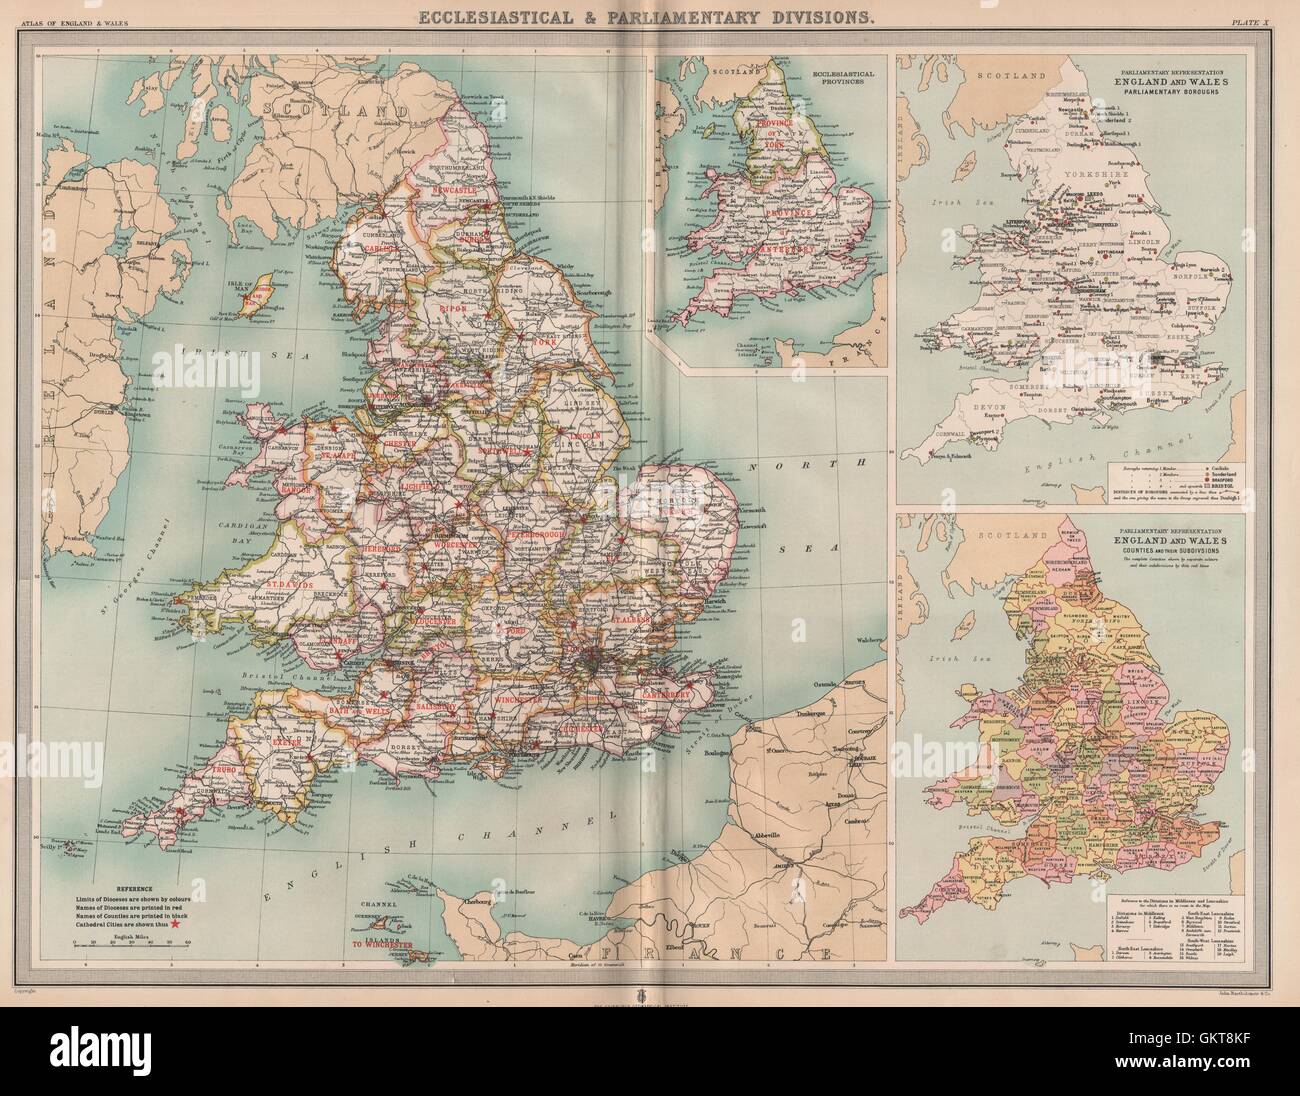 ENGLAND & WALES Eccelestiastical & parliamentary constituencies. LARGE, 1903 map Stock Photo